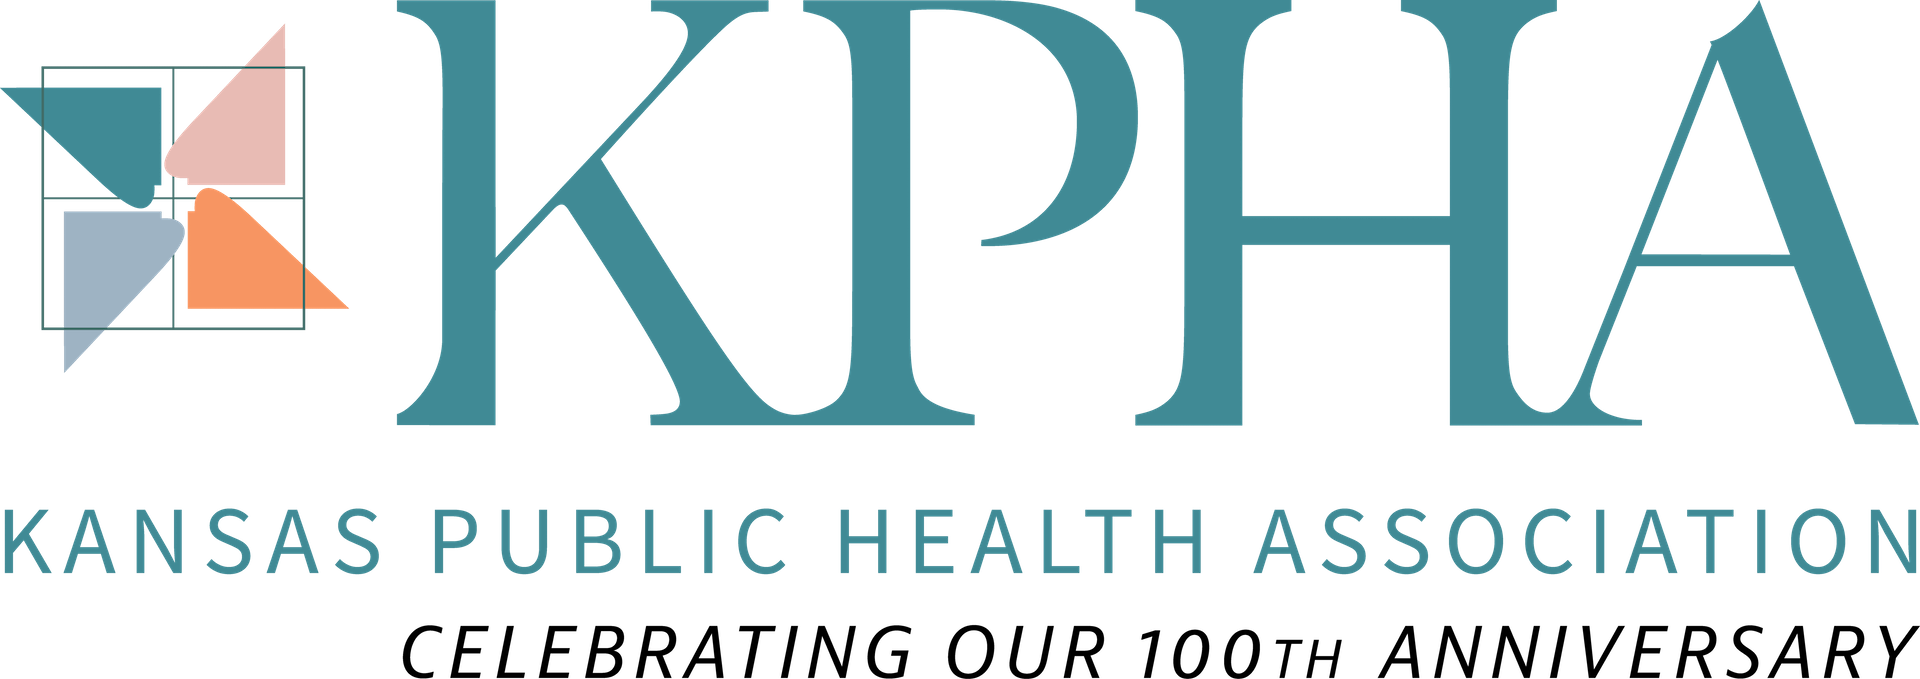 Kansas Public Health Association